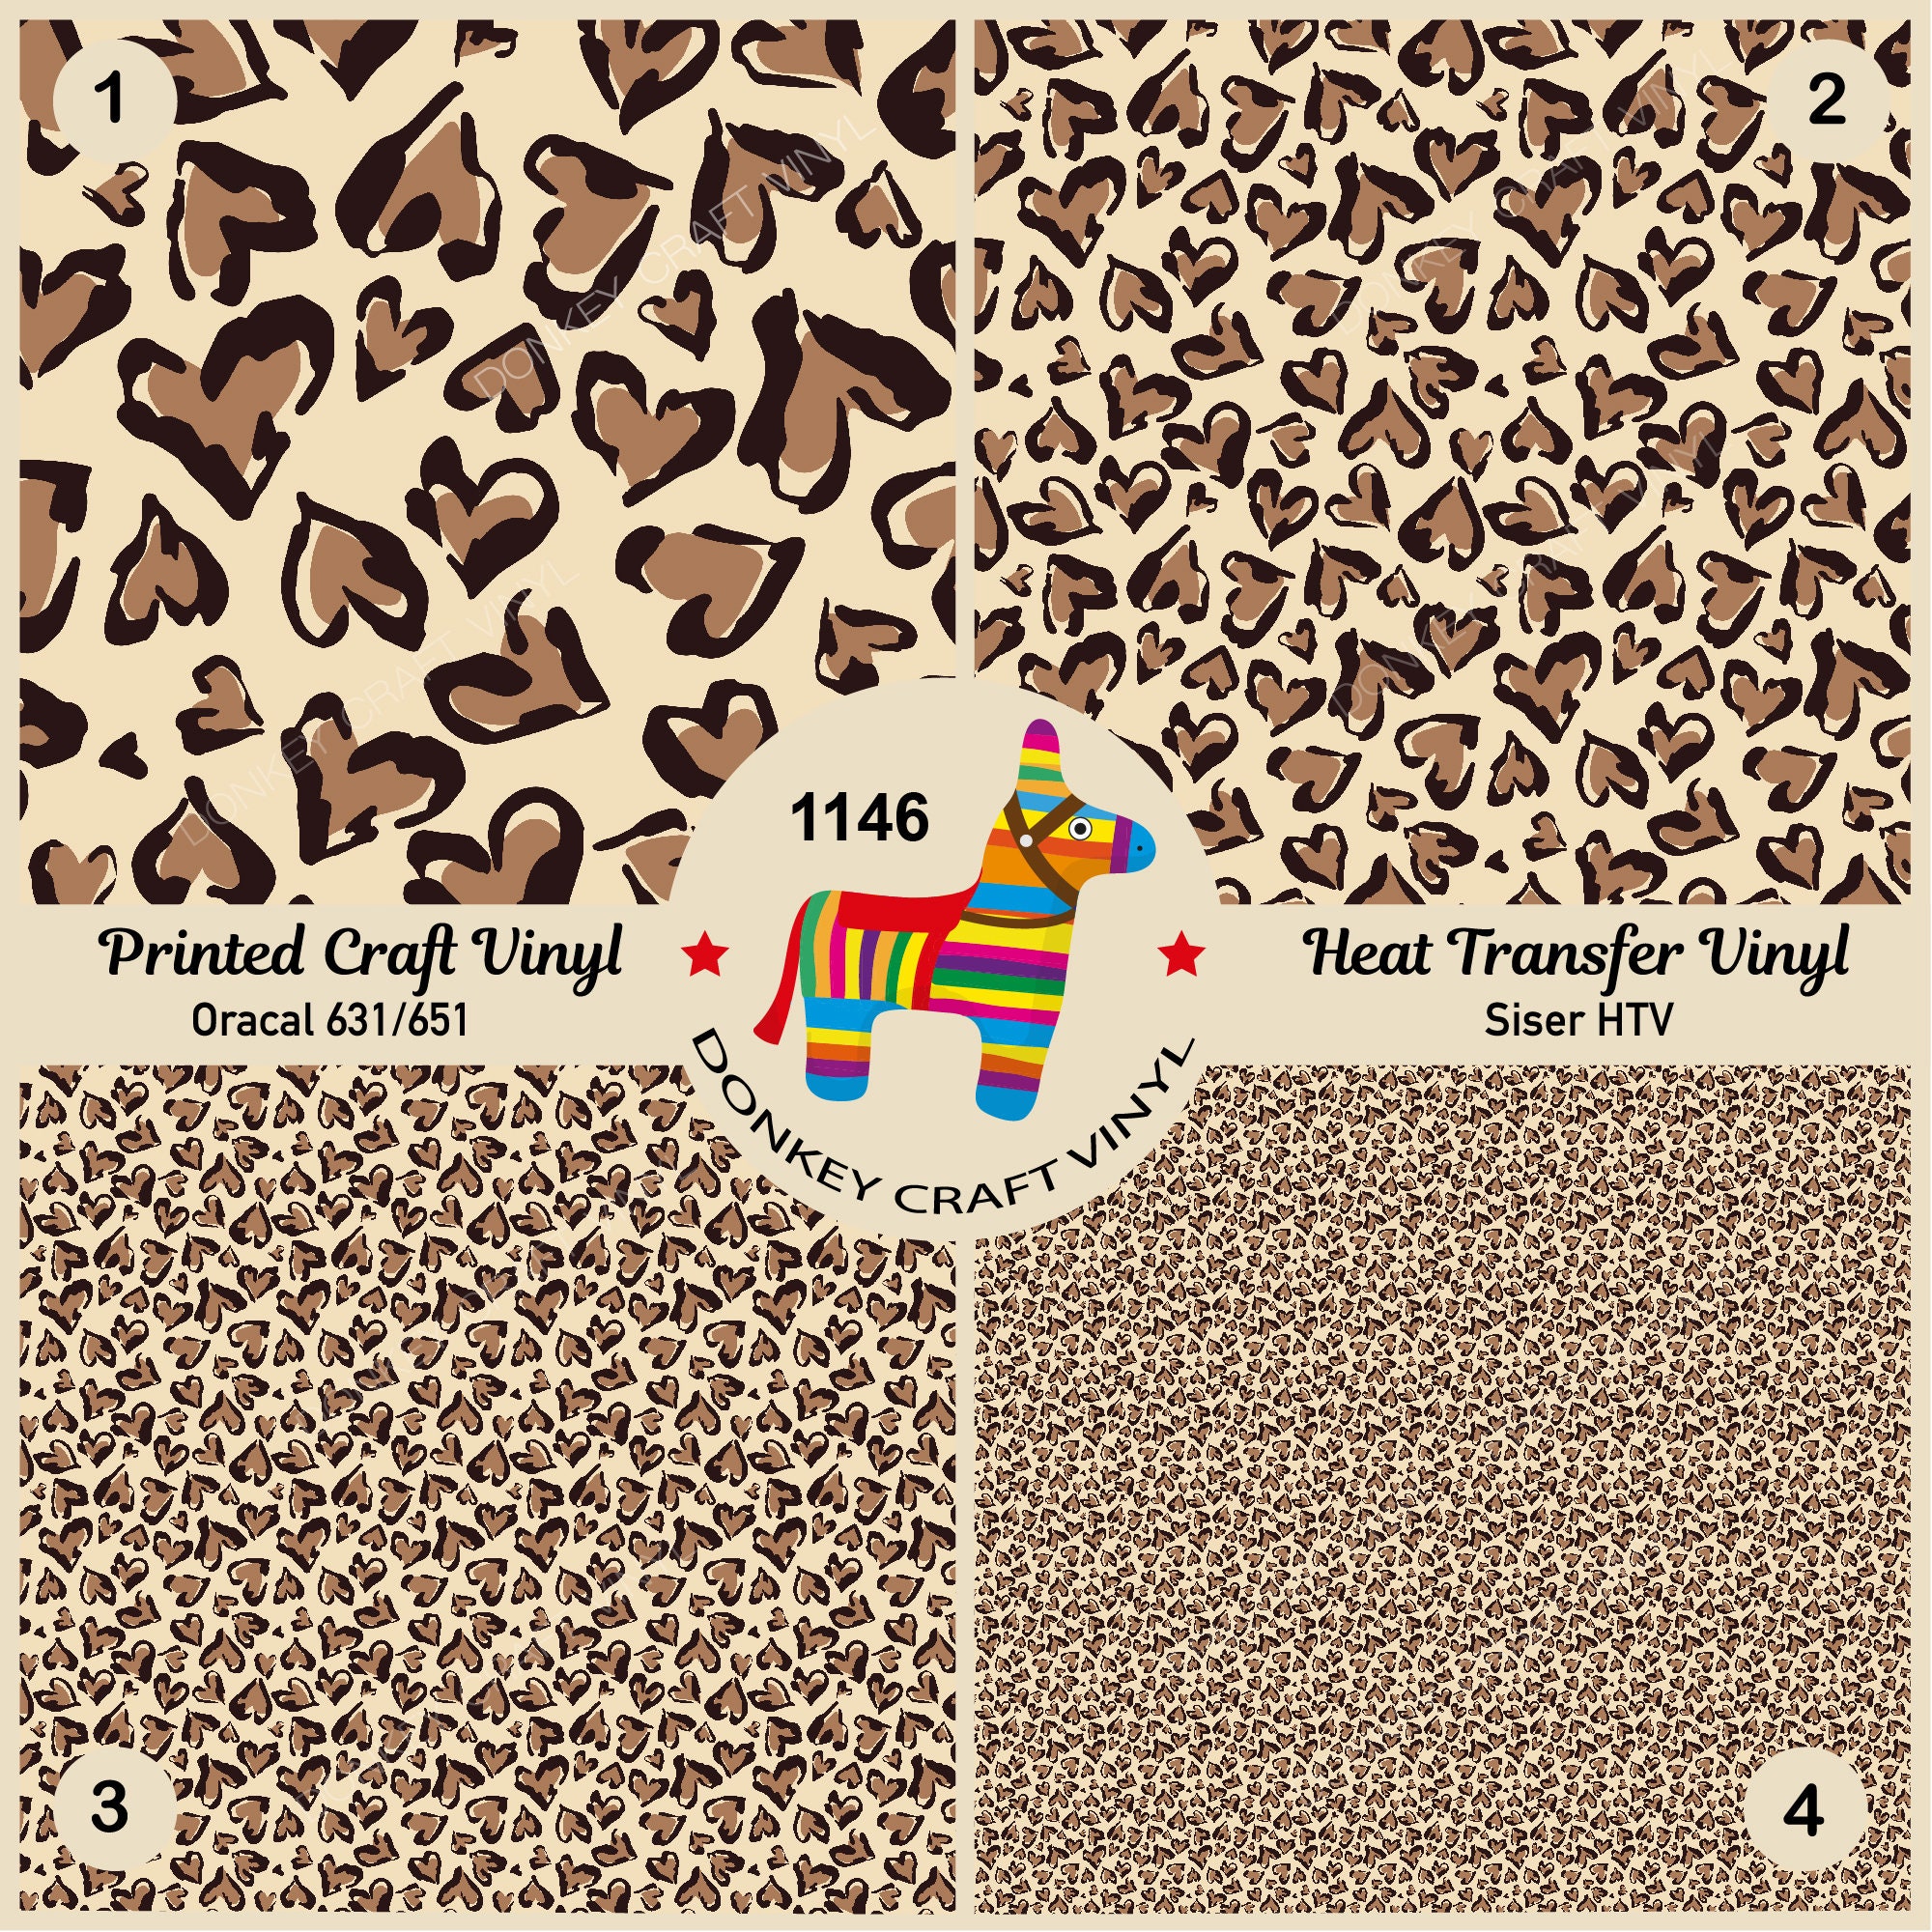 Printed Puff HTV - Pastel Leopard – The Vinyl Warehouse